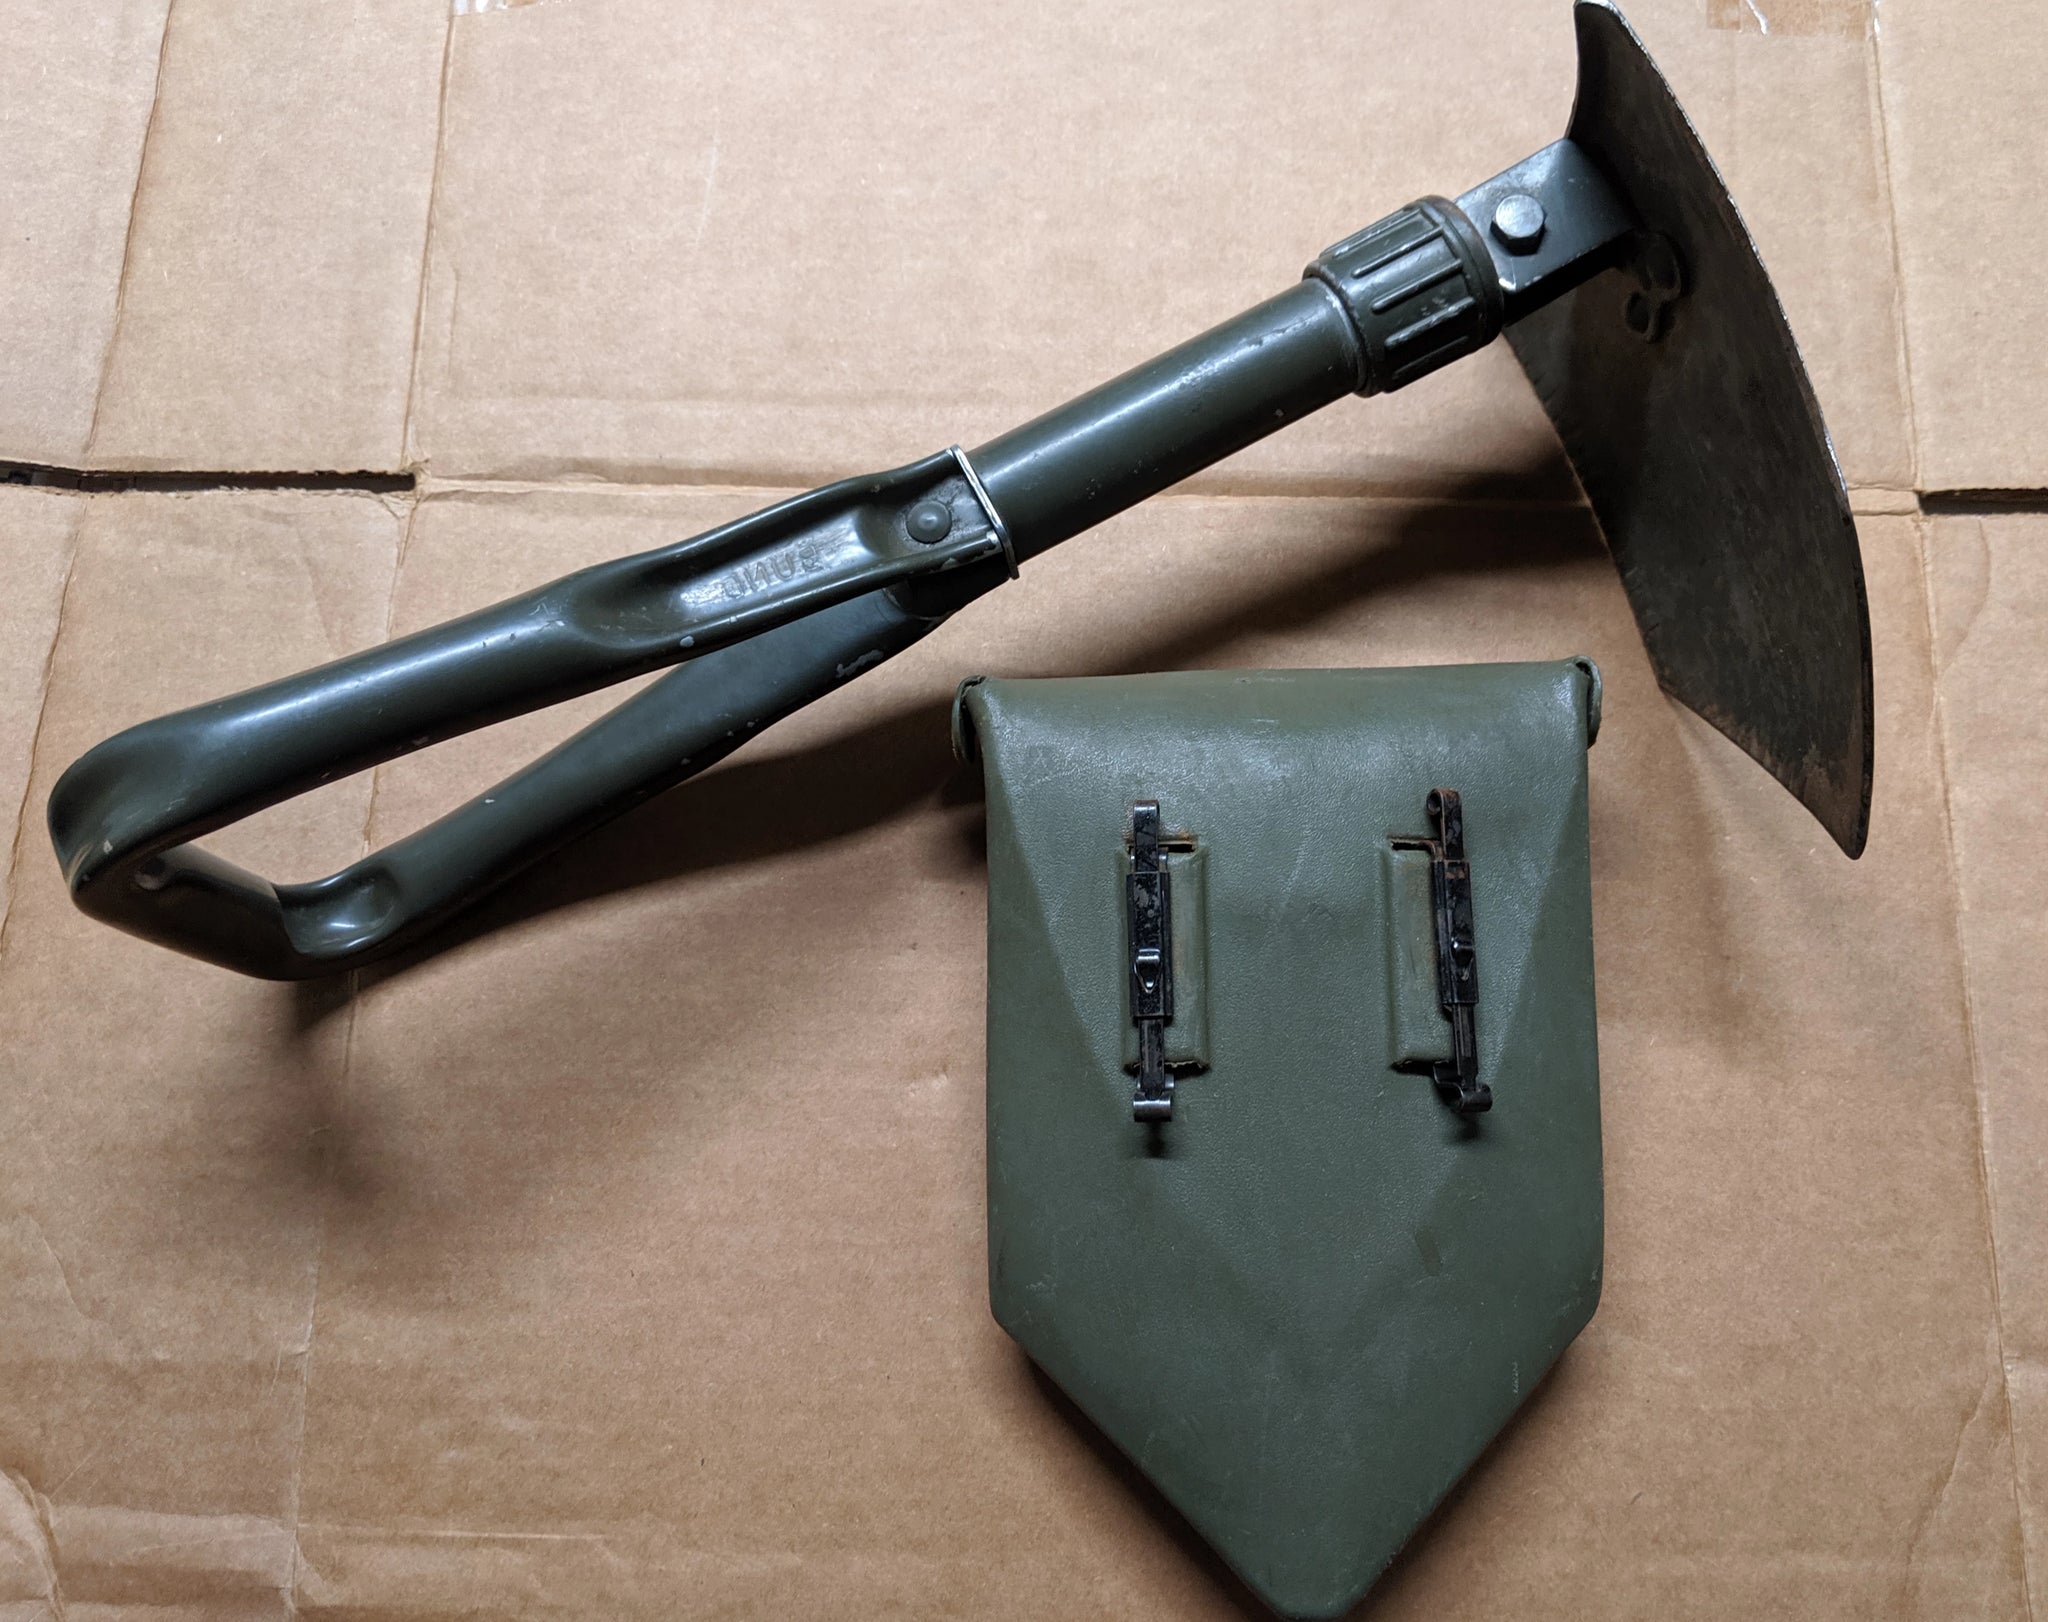 Used Genuine German BUND Military Issue Shovel